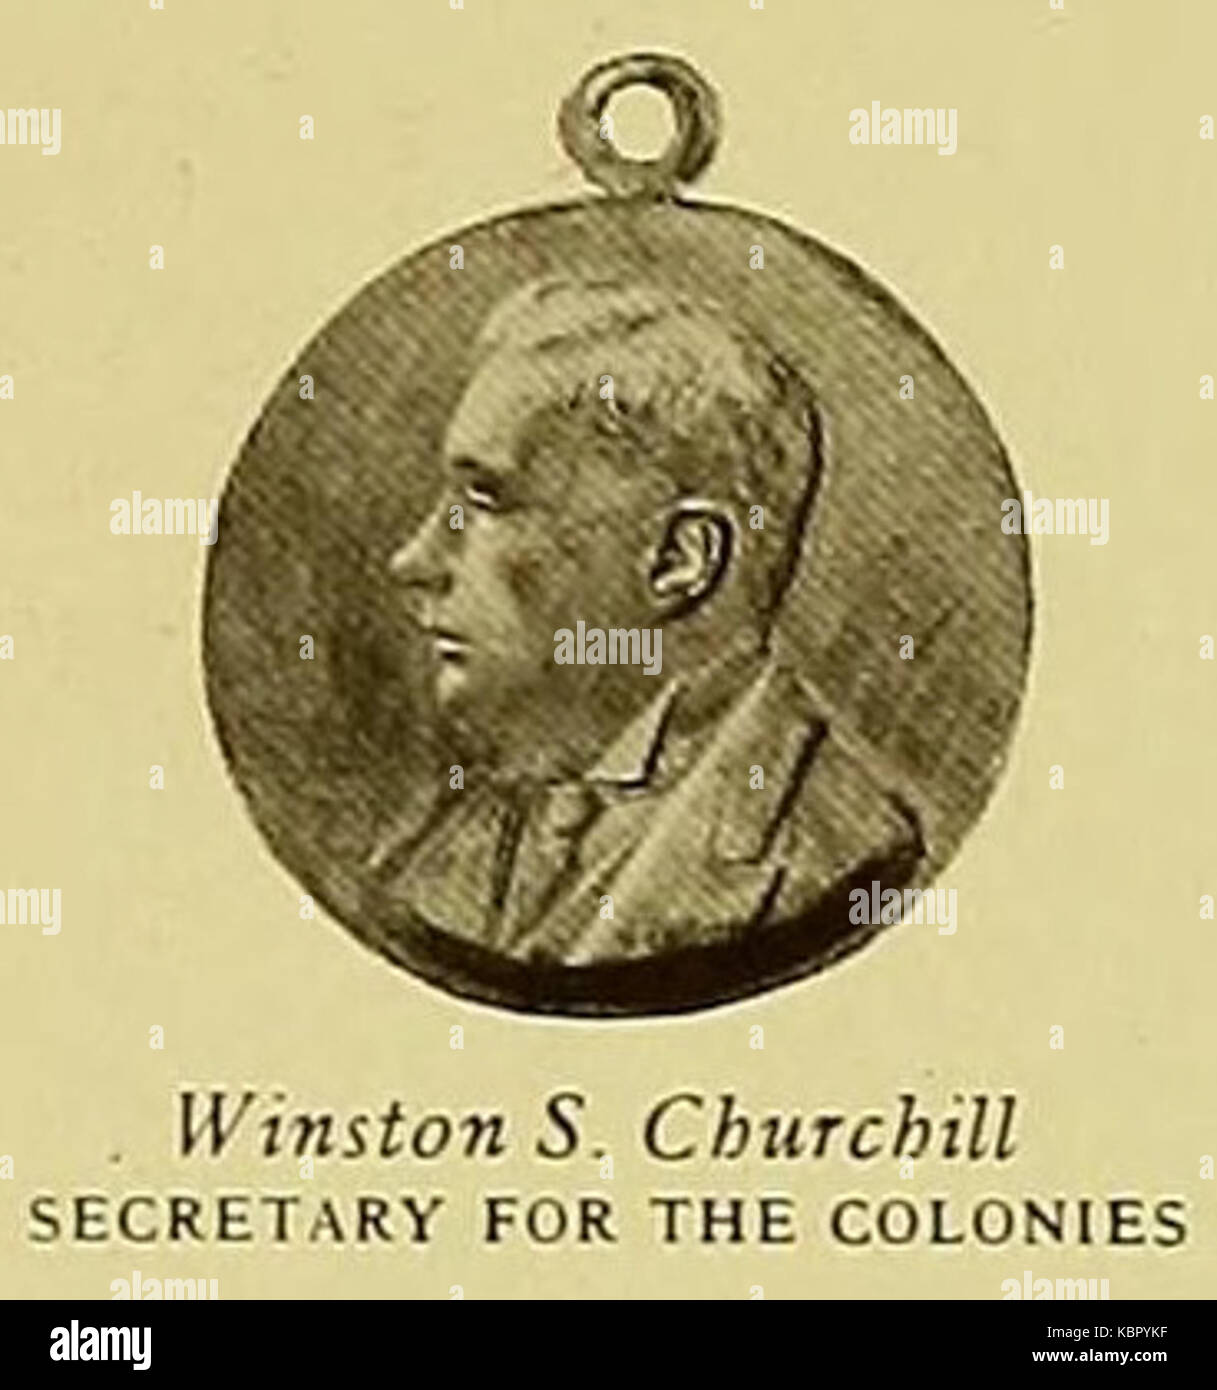 Winston S. Churchill. Medal designed by Emil Fuchs Stock Photo